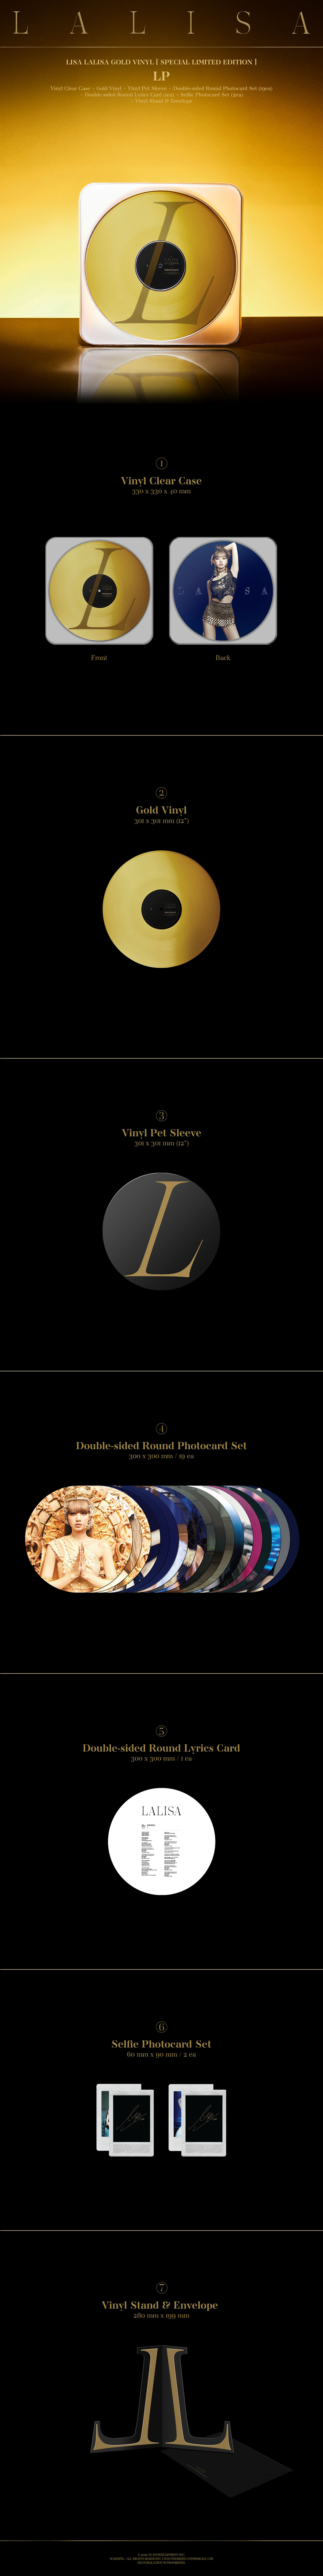 ktown4u.com : [BP ALBUM][Promotion Event] LISA - LALISA GOLD VINYL 